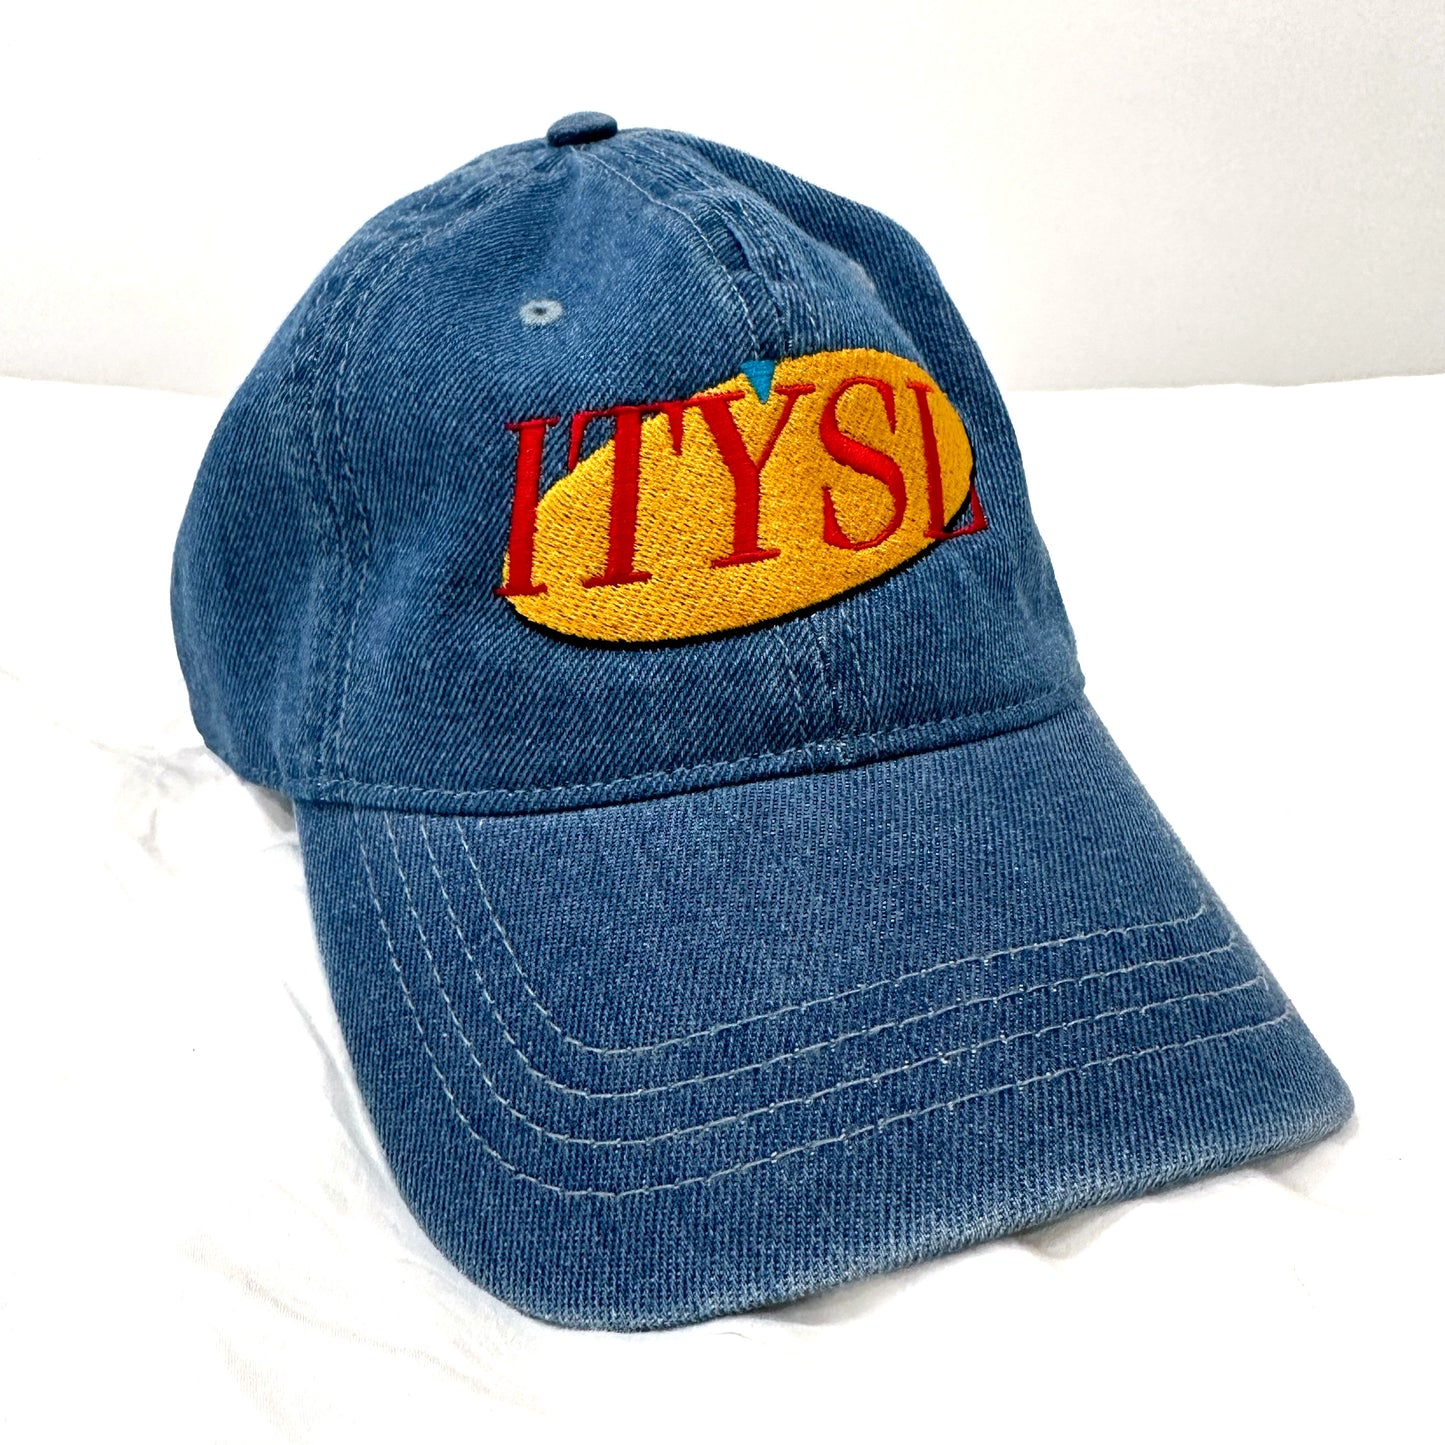 ITYSL Sitcom Denim Hat – I Think You Should Affirm